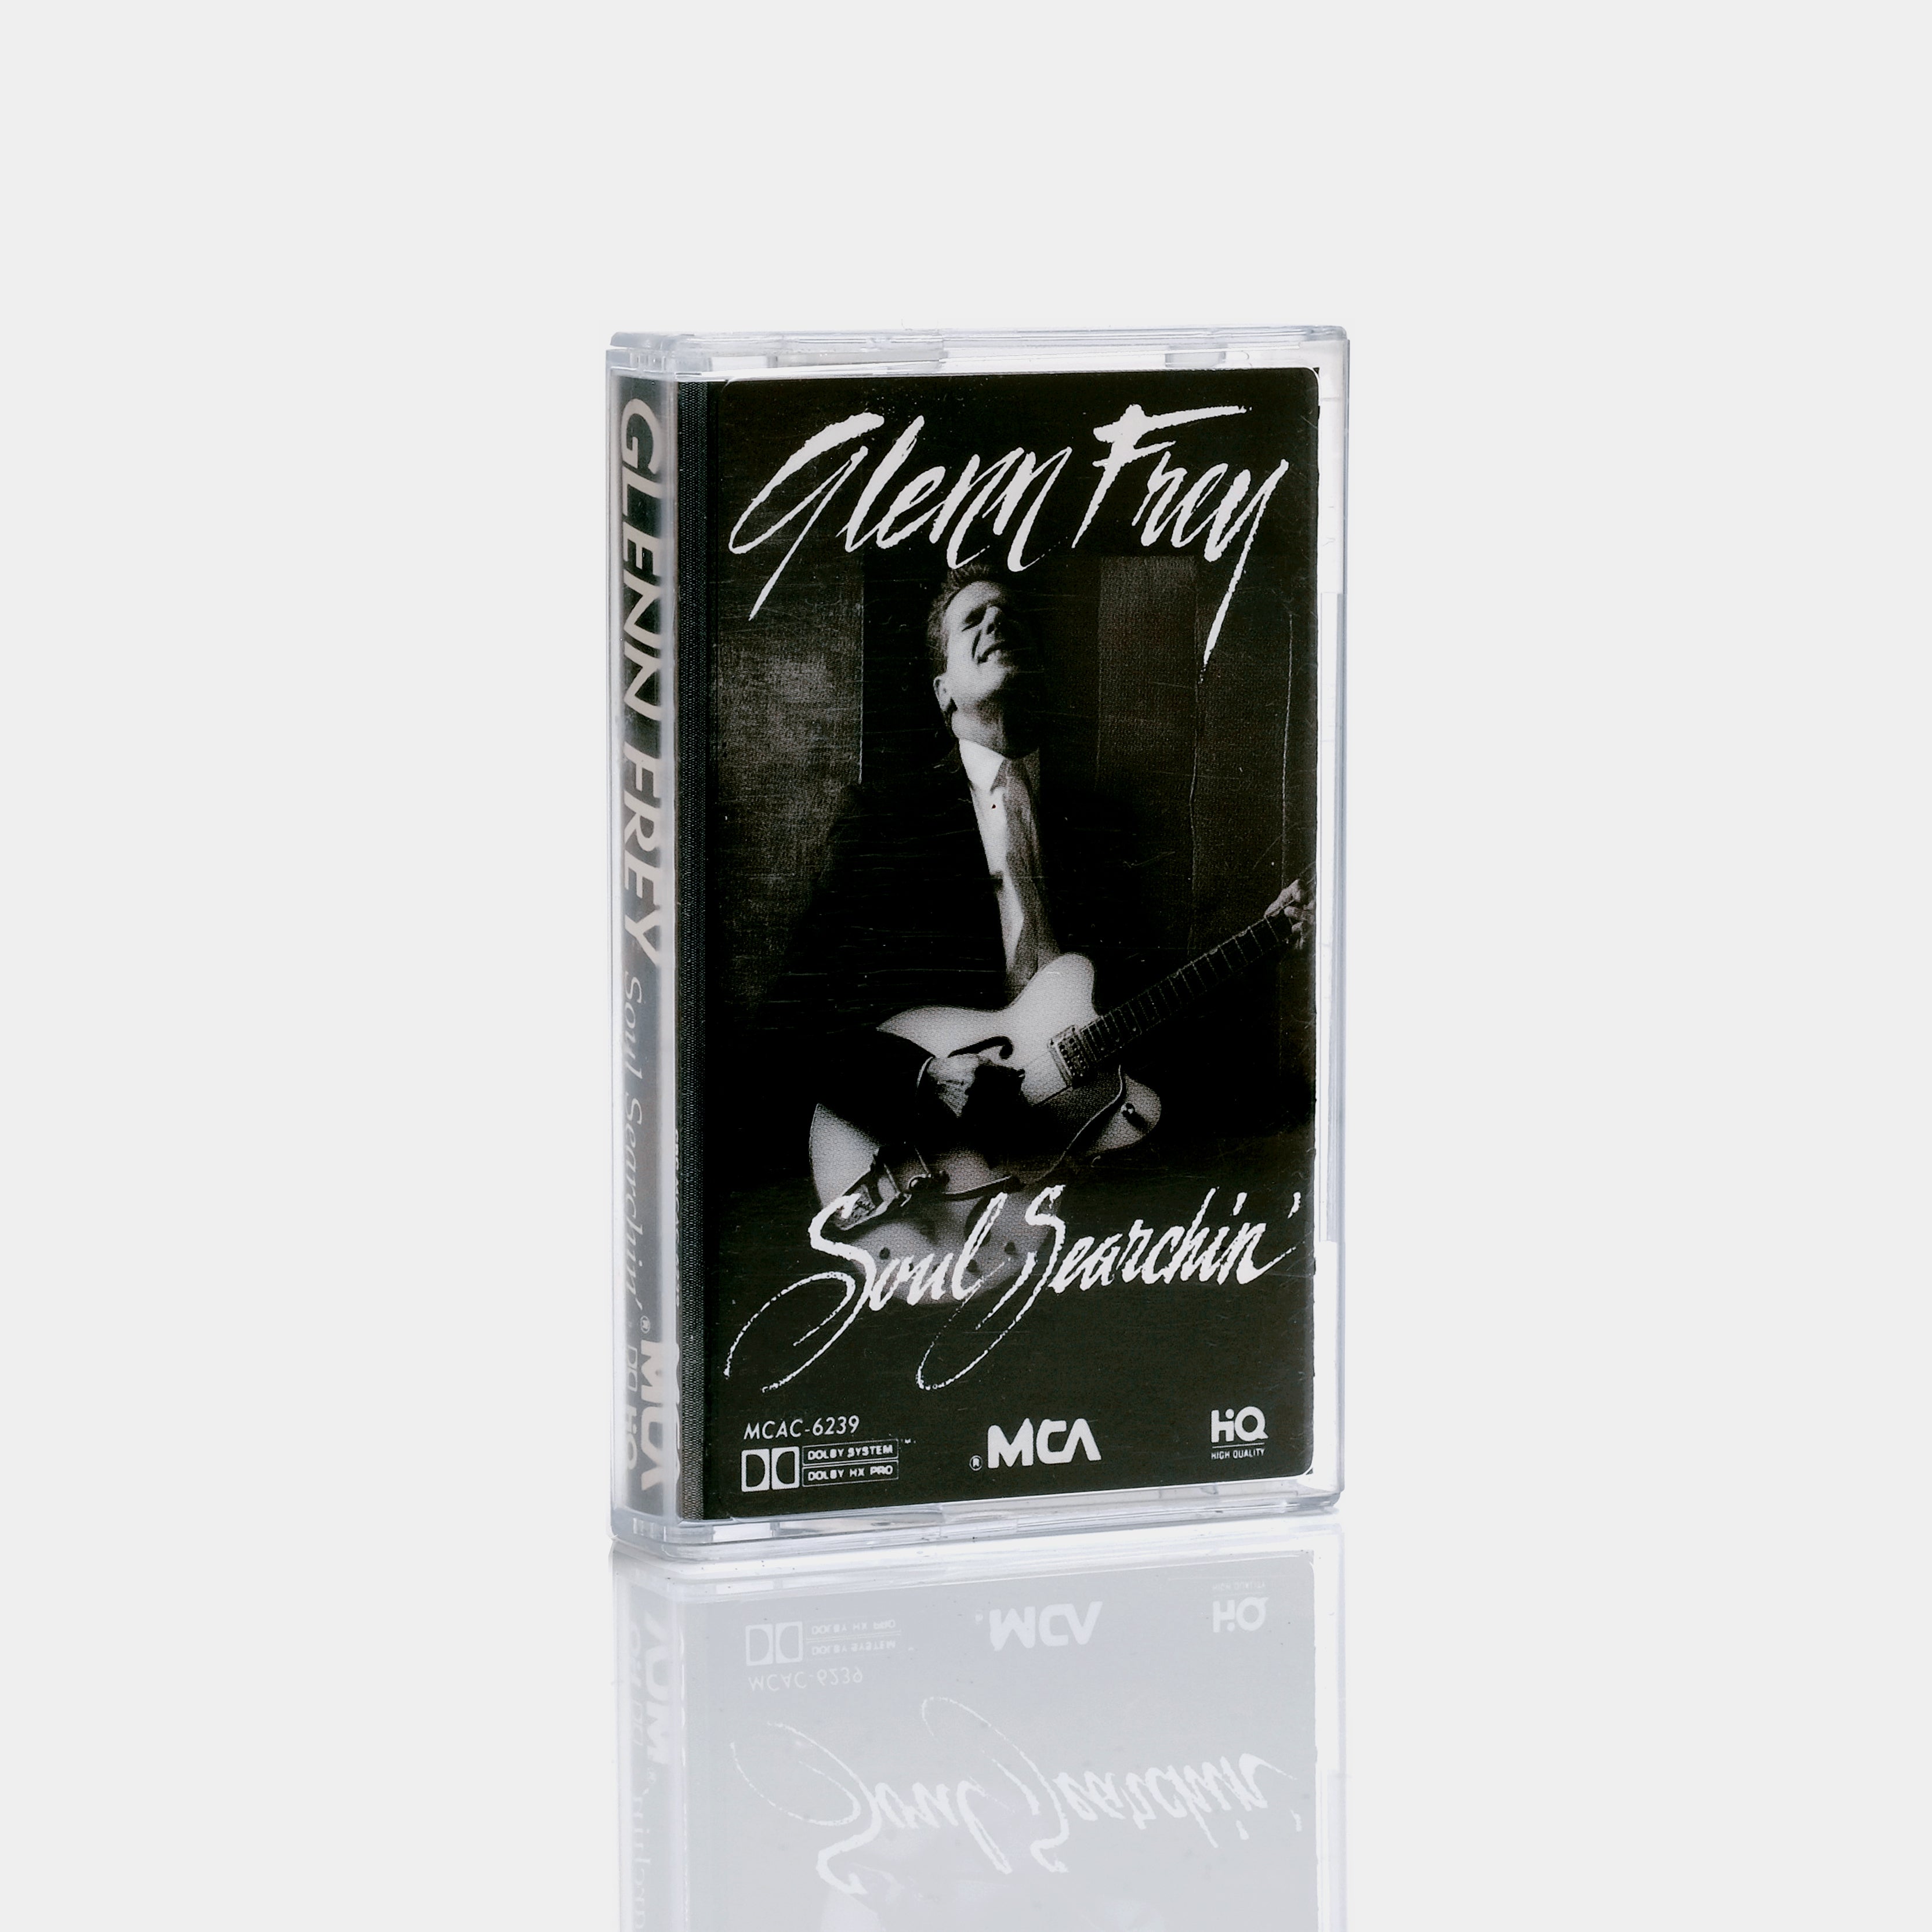 Glenn Frey - Soul Searchin' Cassette Tape